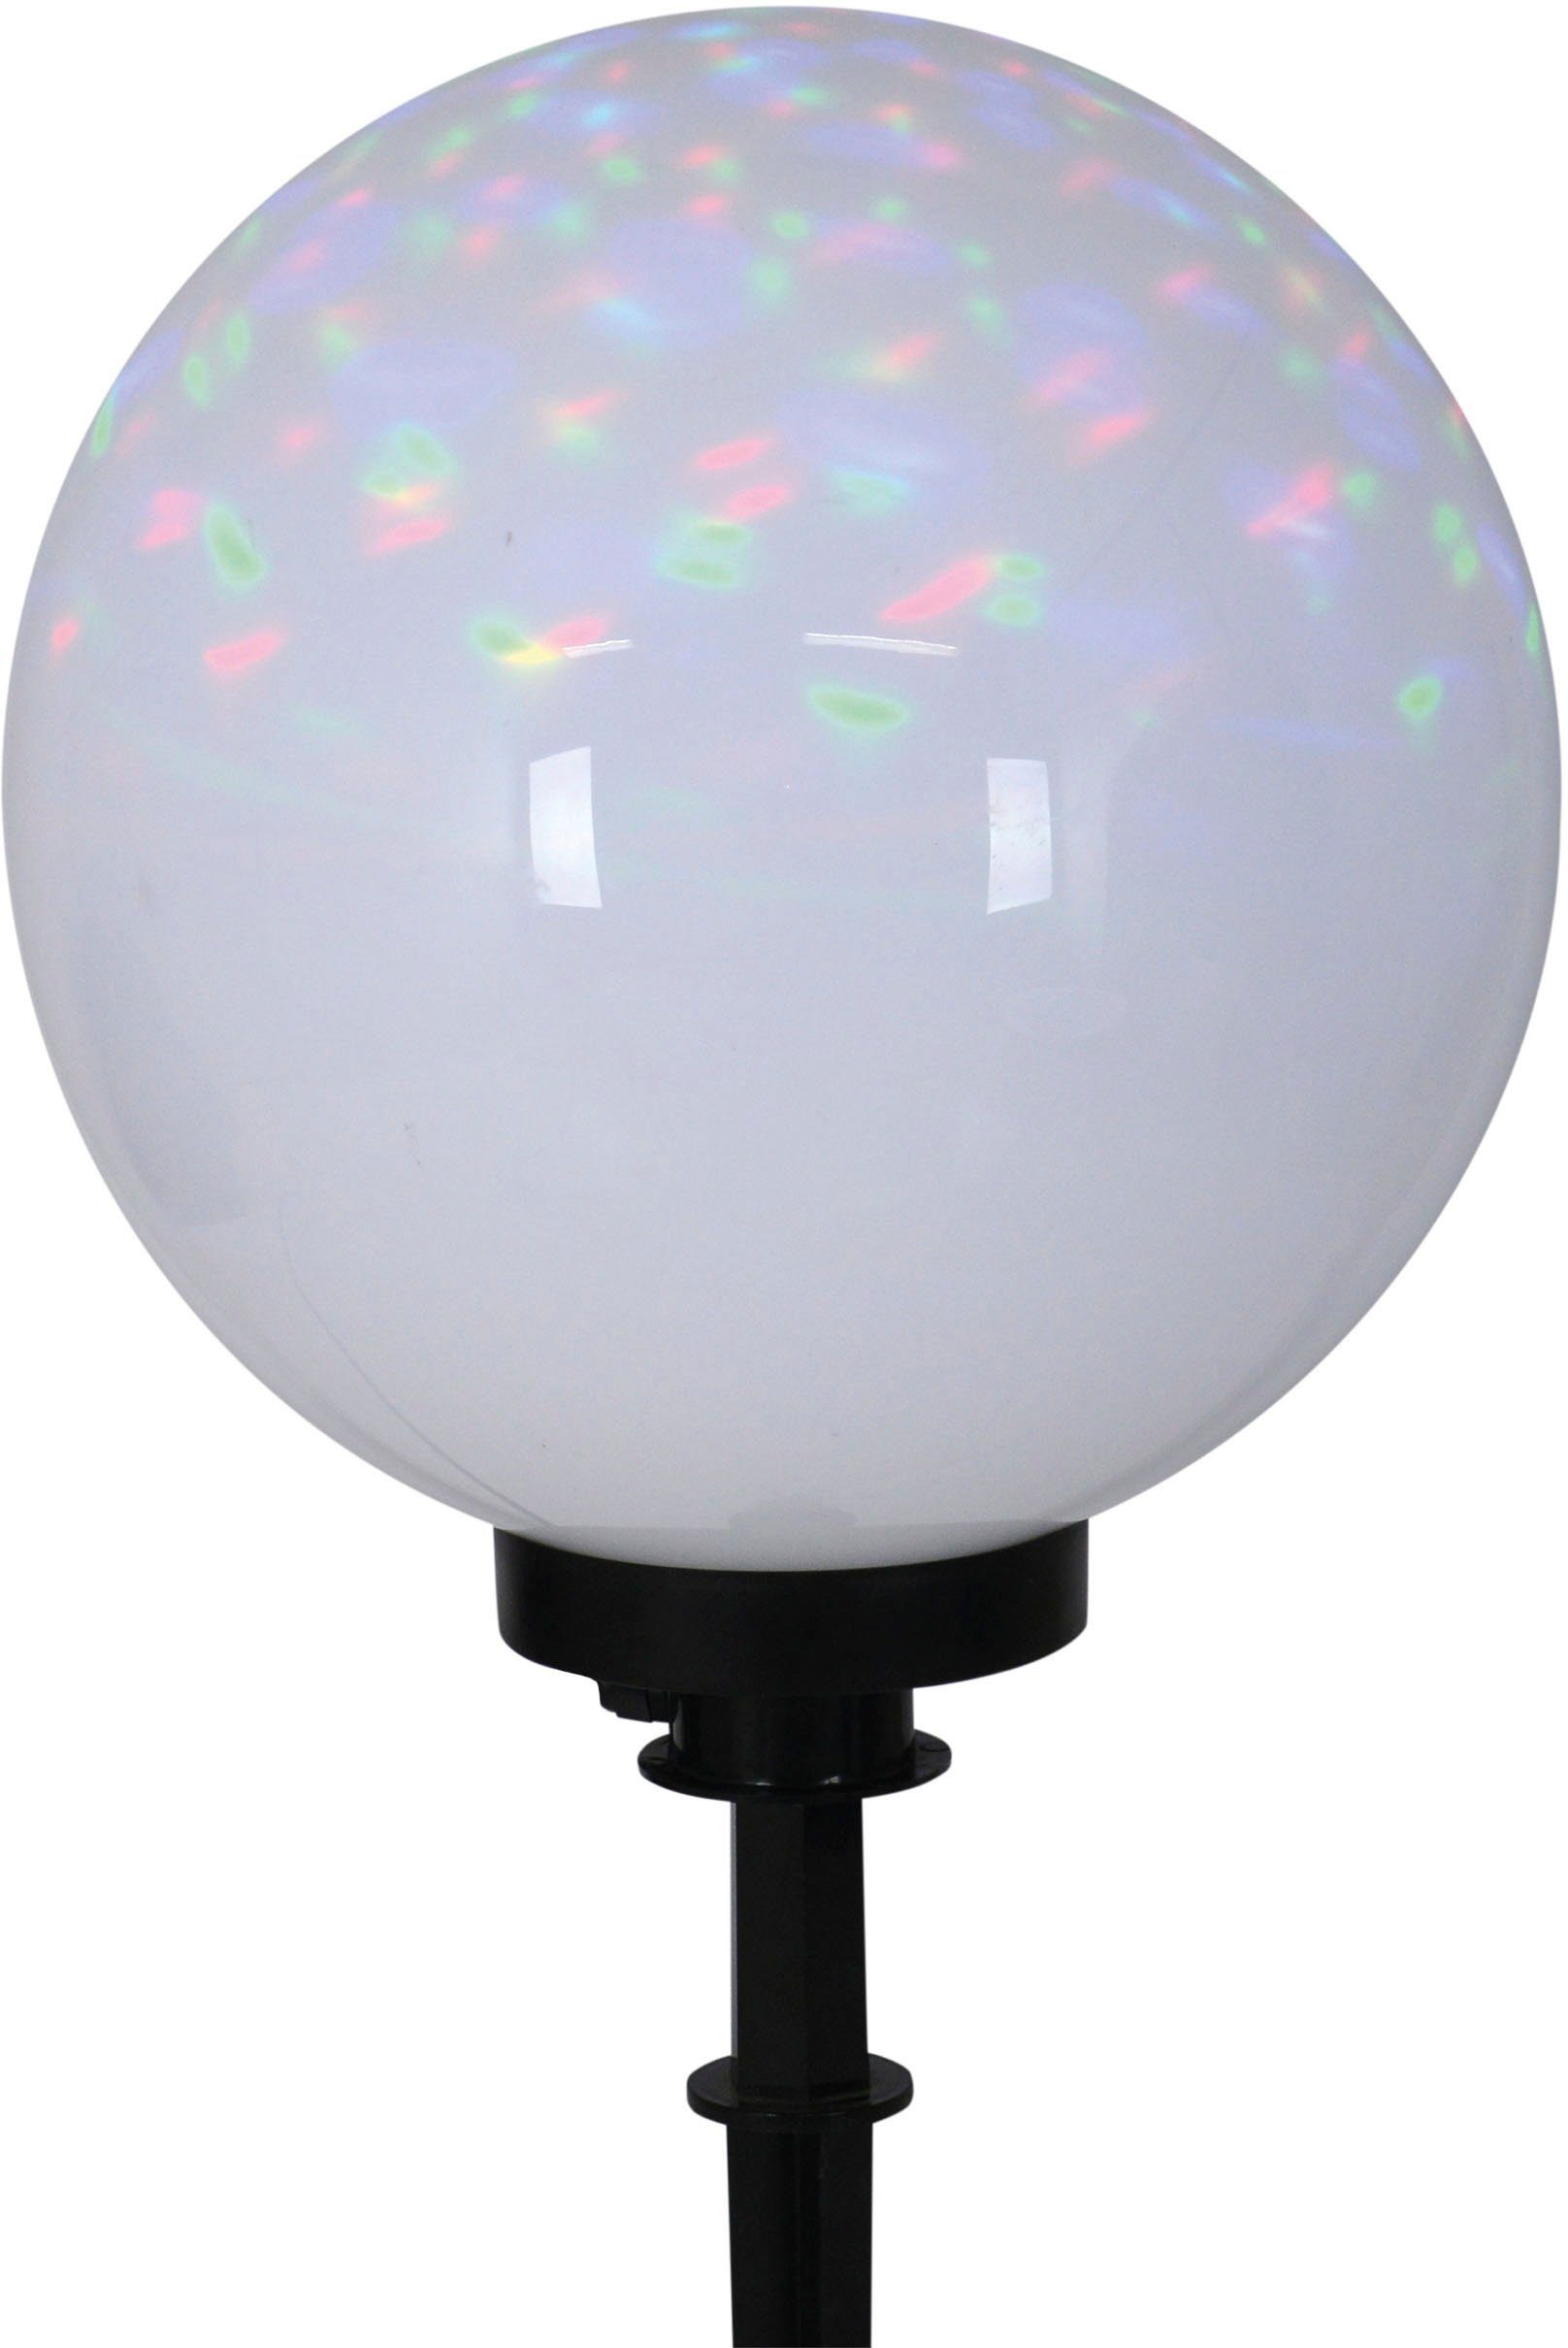 näve Kugelleuchte Ball, Leuchtmittel wechselbar, Kunststoff, weiß/opal, D: 40cm, Spieß schwarz, exkl. 1 x E27 max. 40W | Alle Lampen